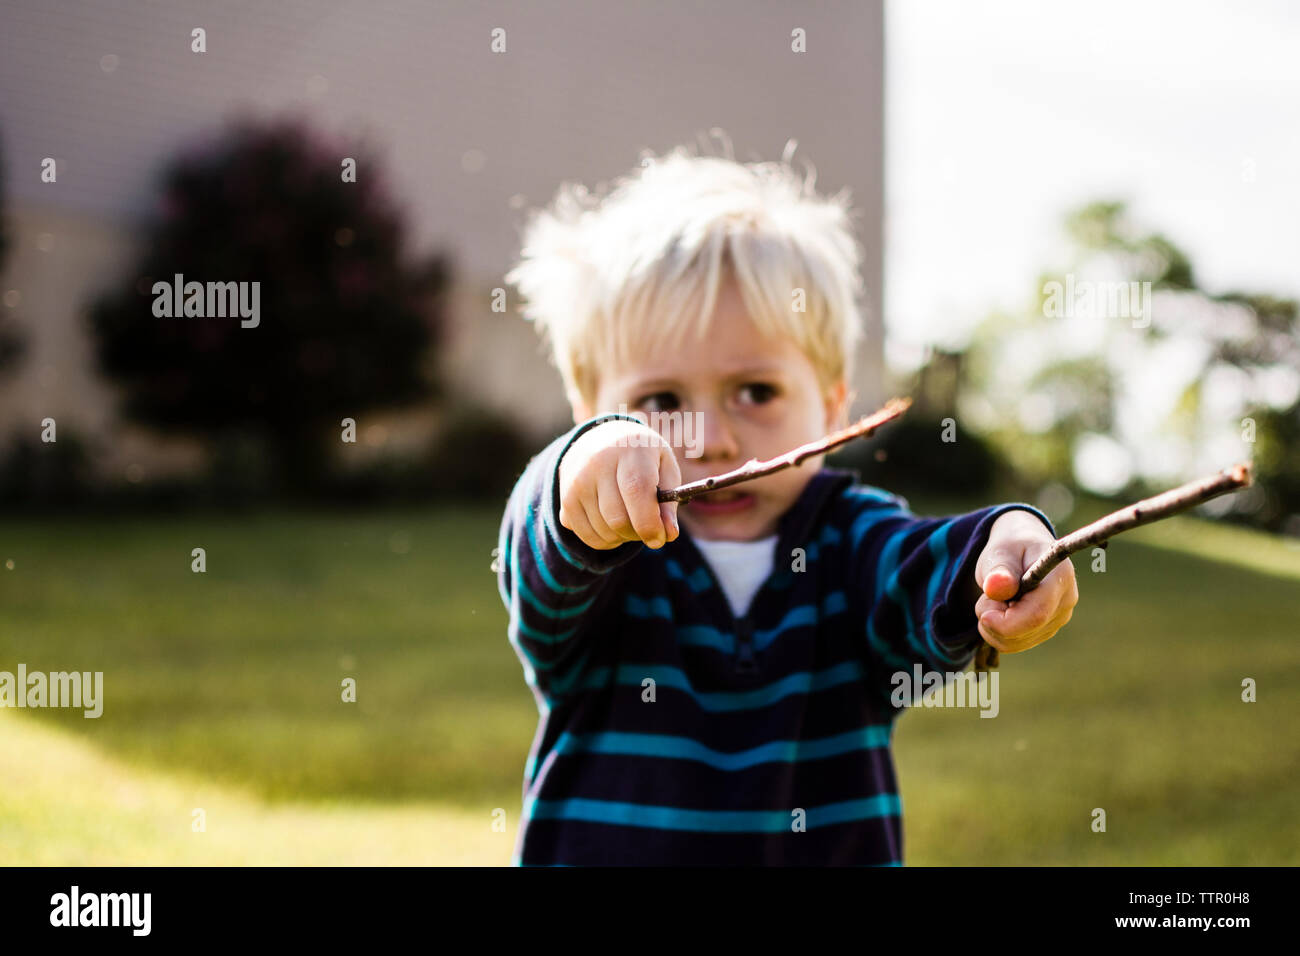 Boy playing with sticks in backyard Stock Photo